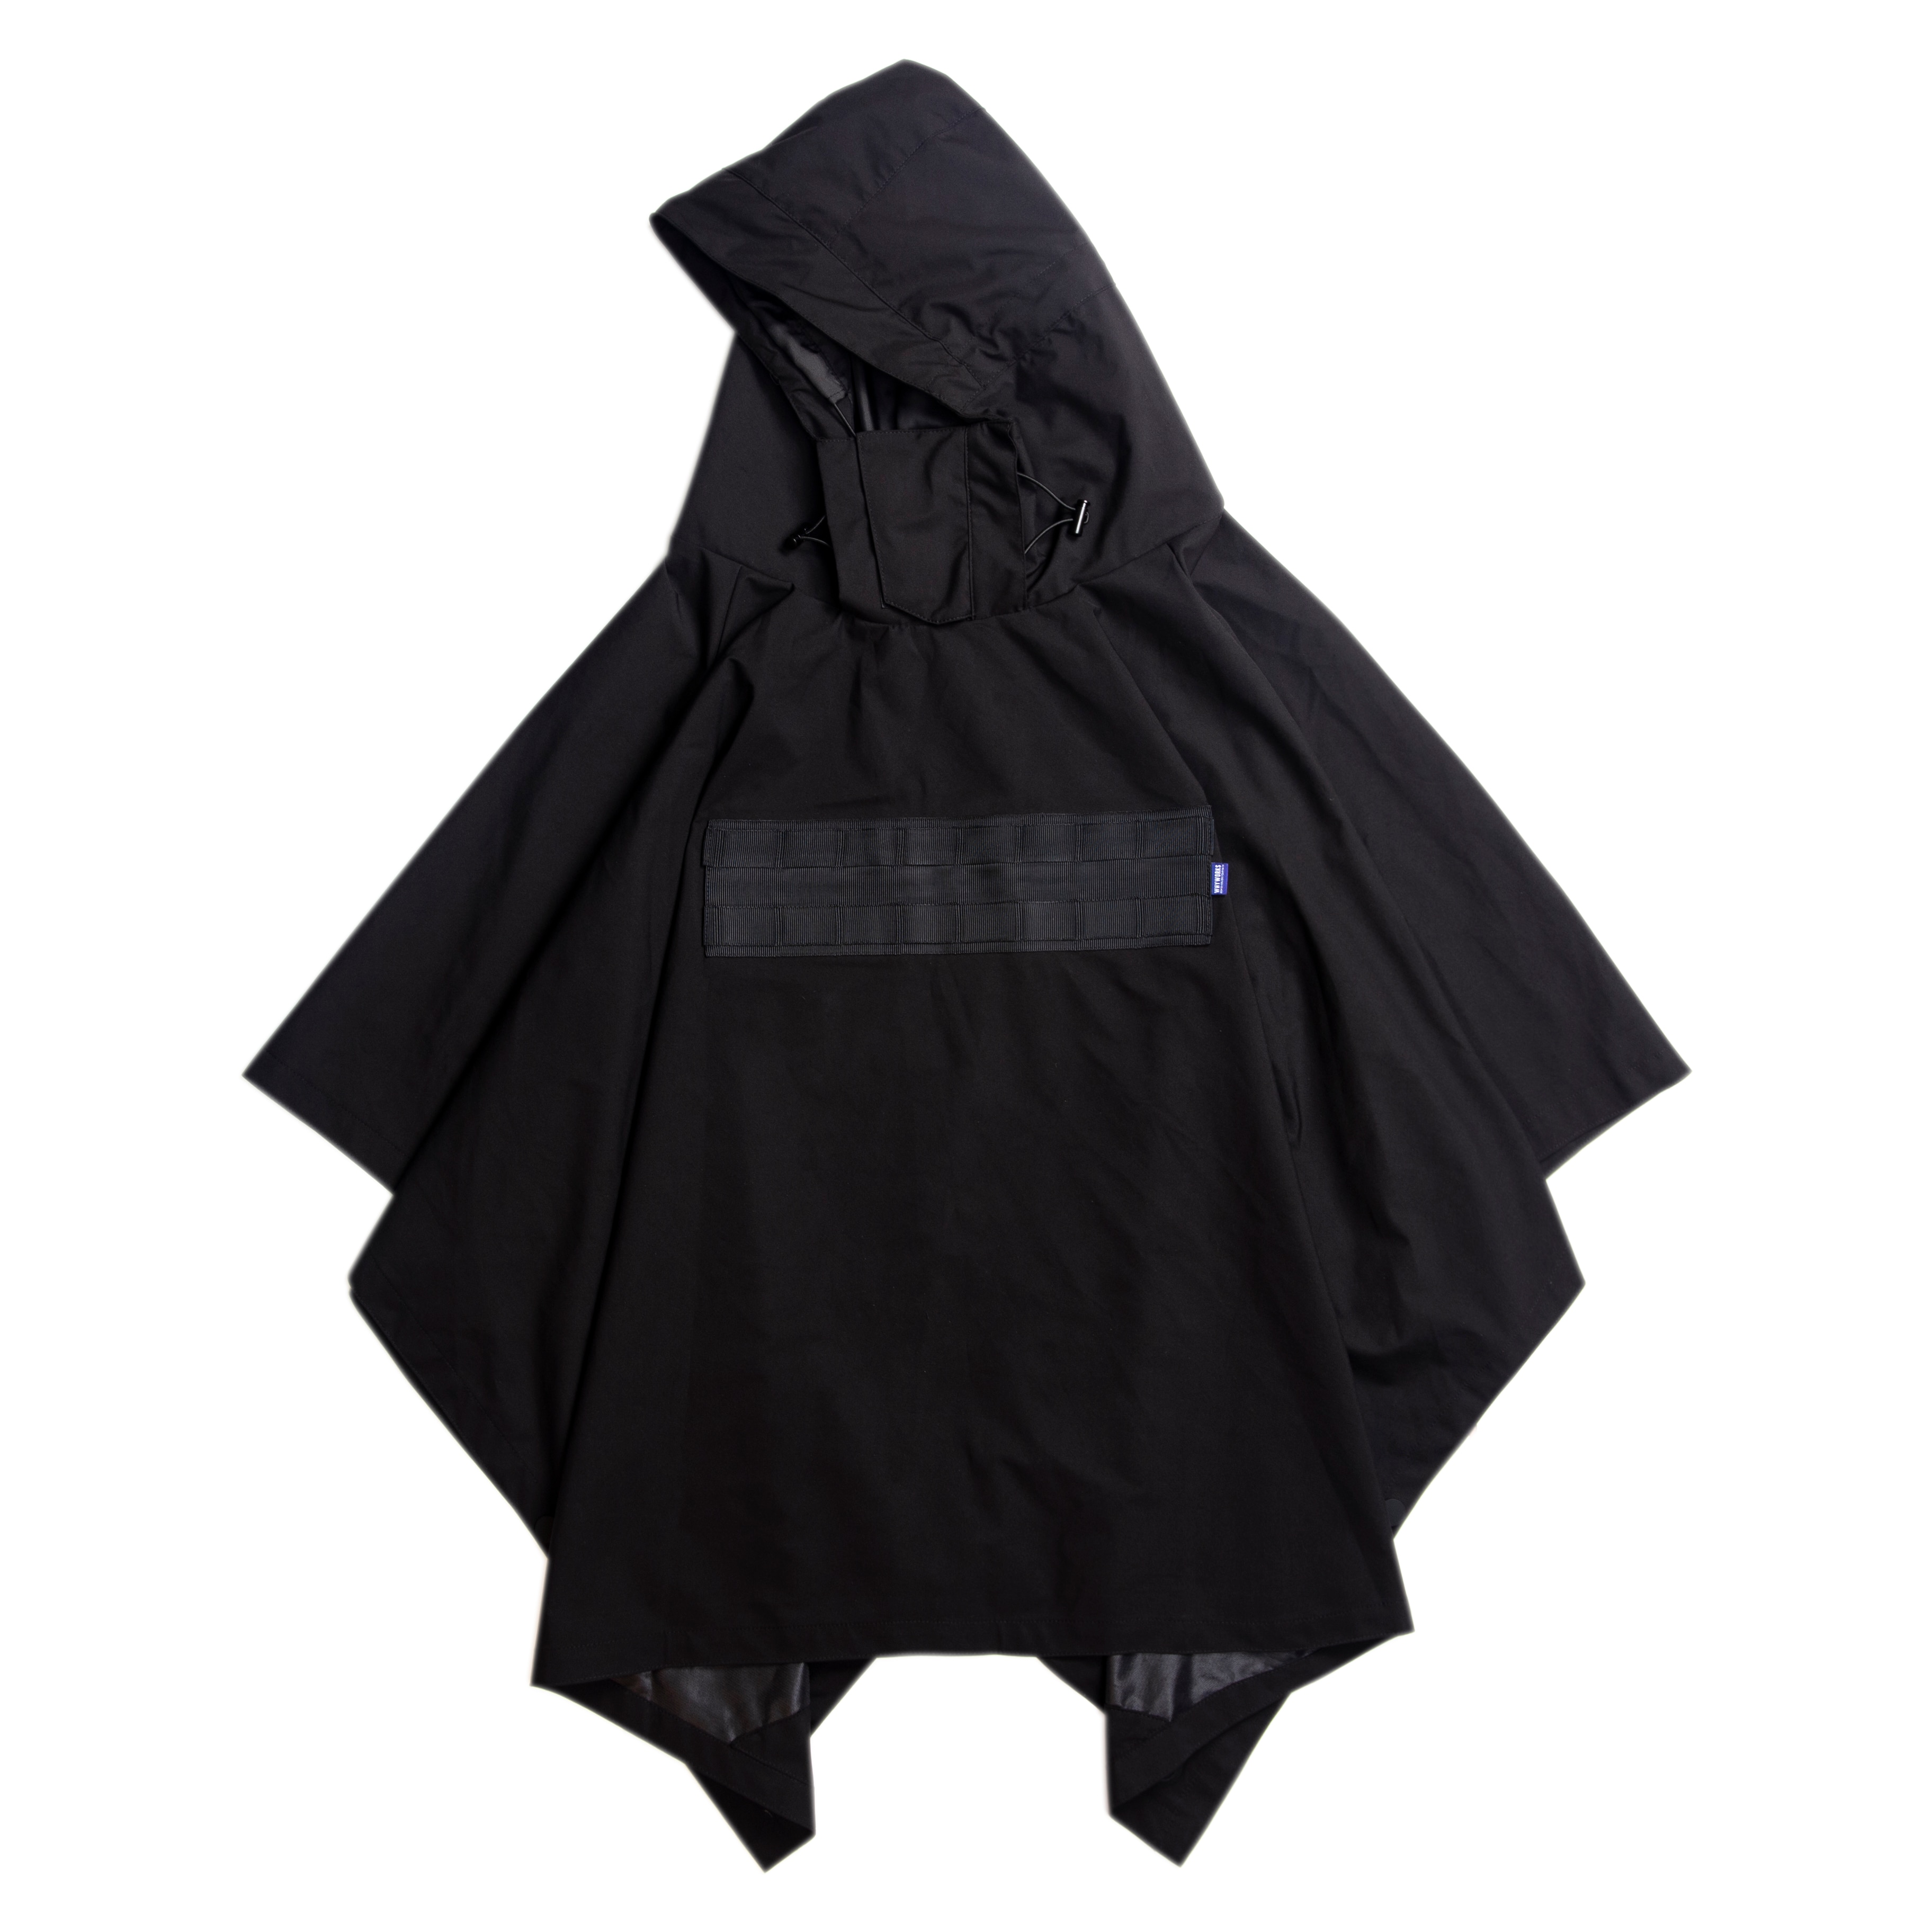  ǳ  techwear ninjawear darkwear ߿ whrs